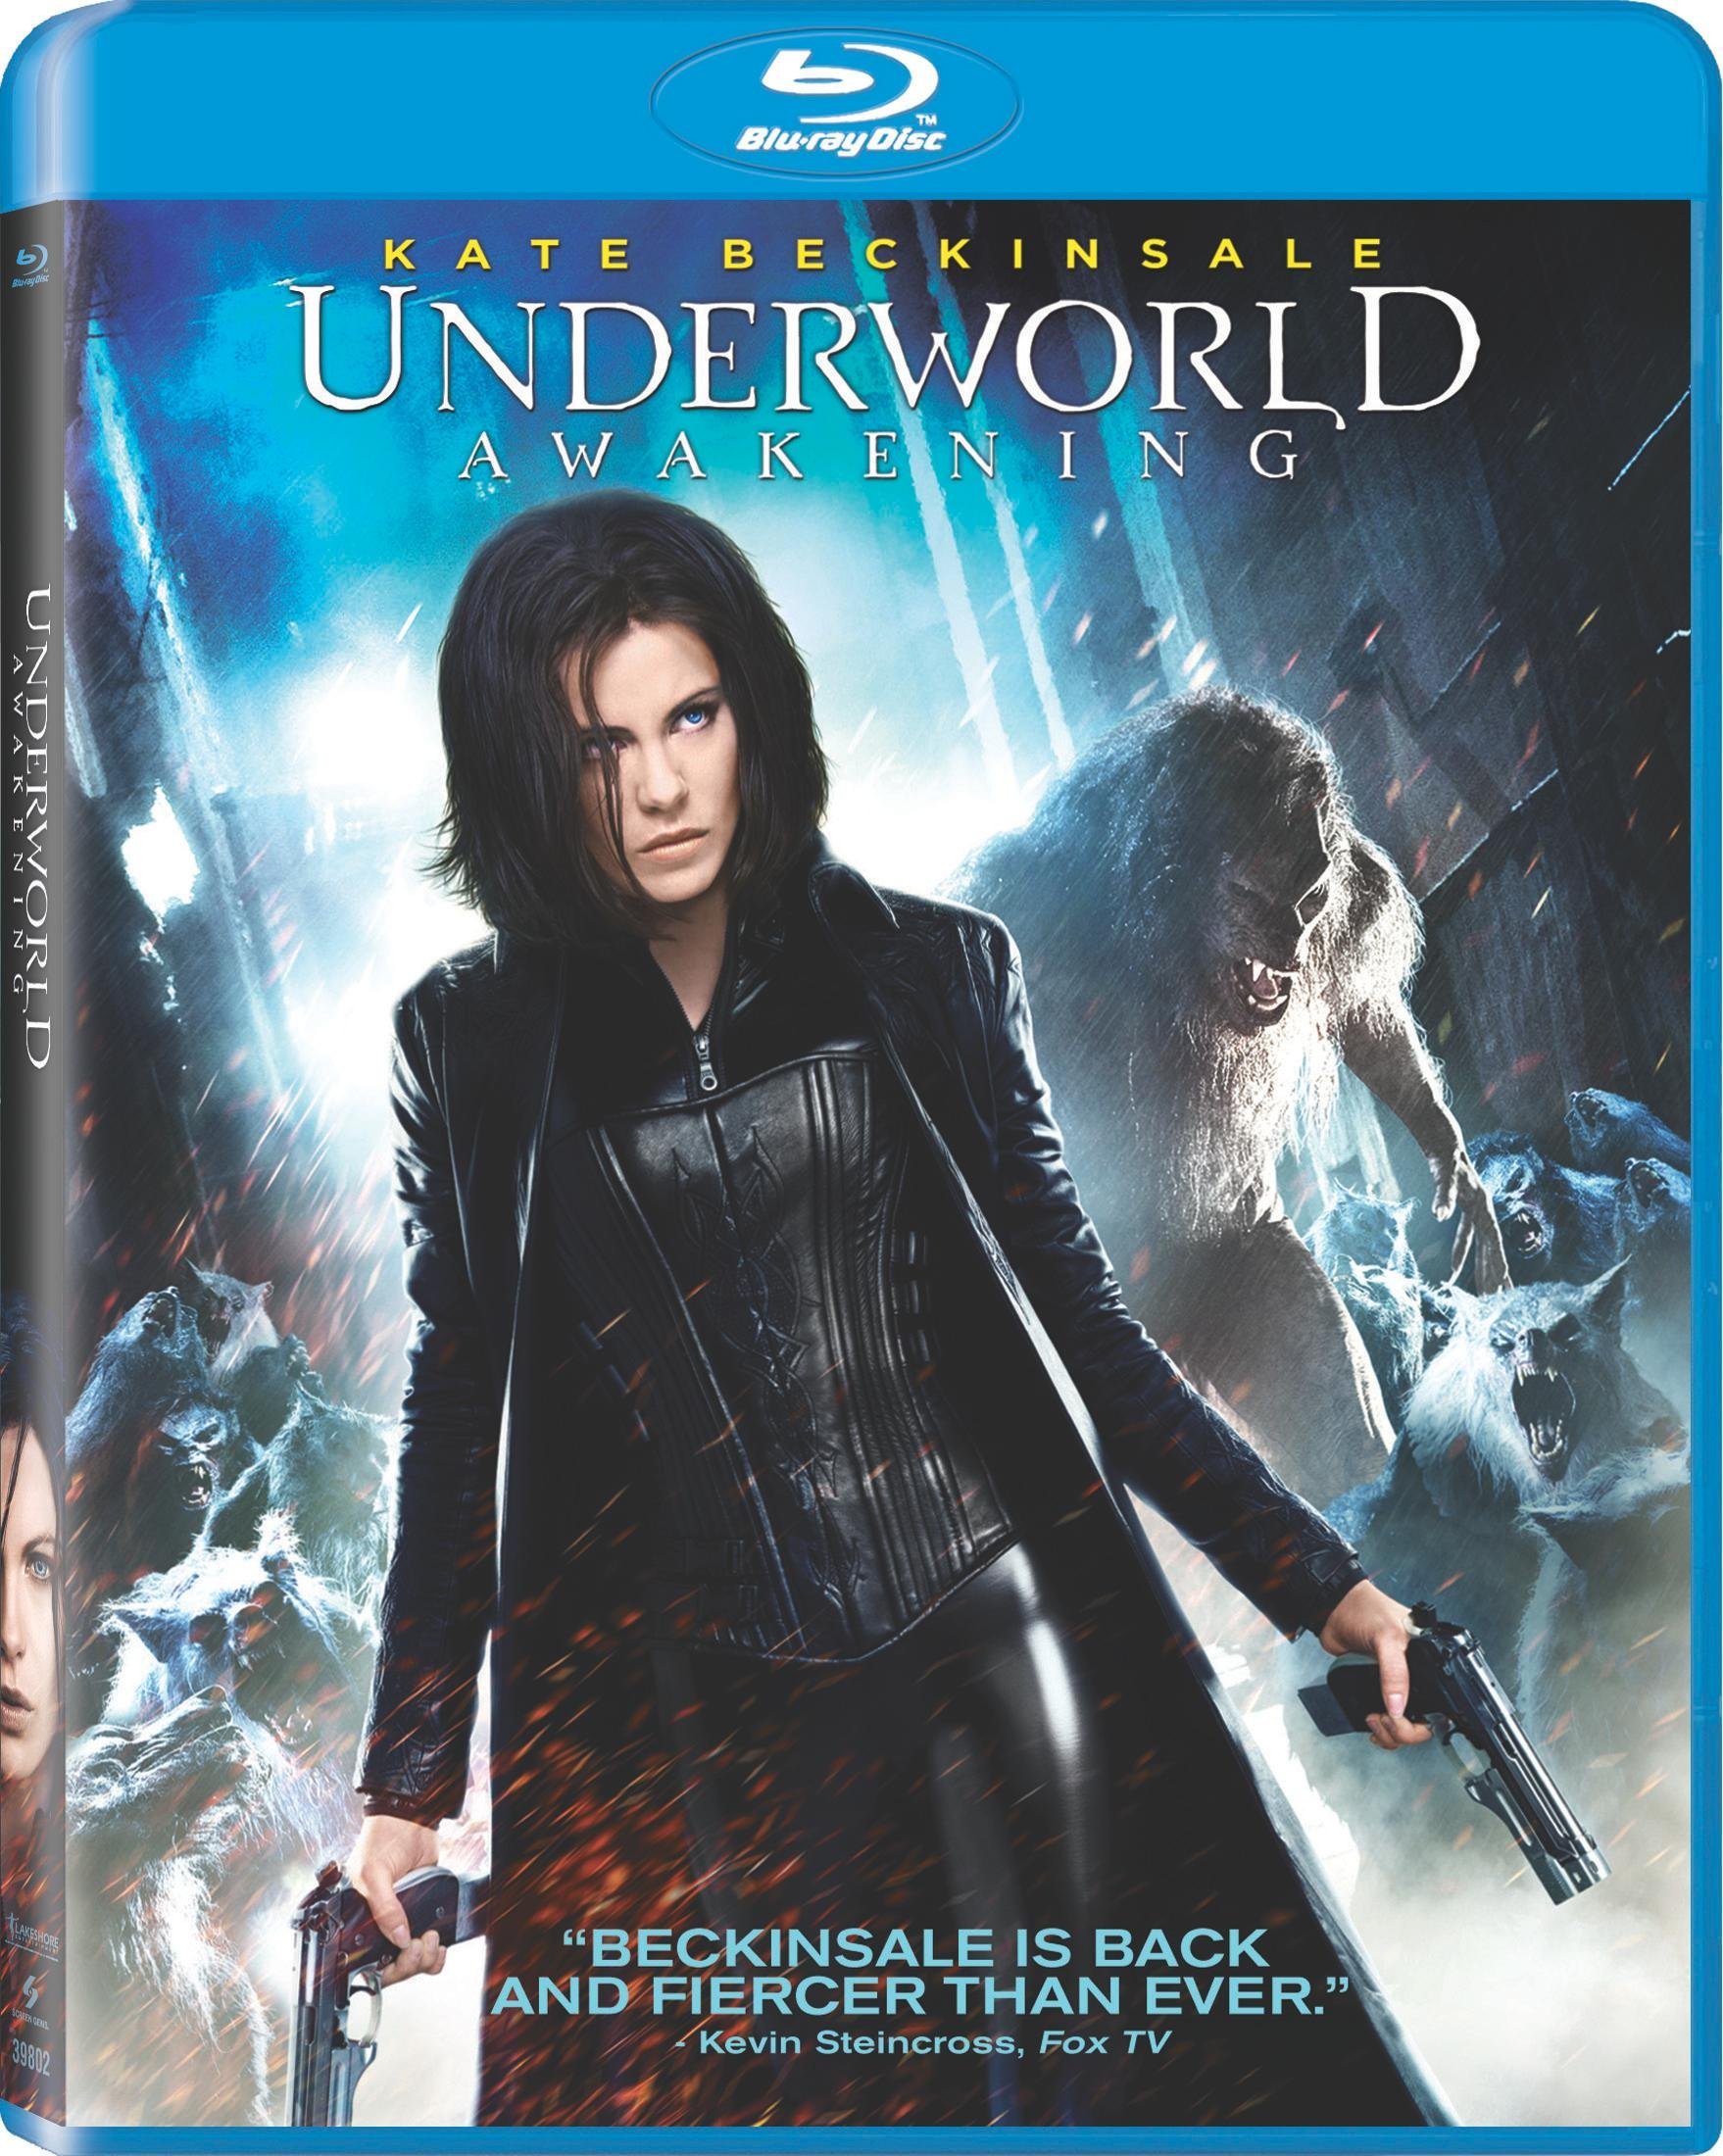 Underworld Awakening DVD Release Date May 8, 2012